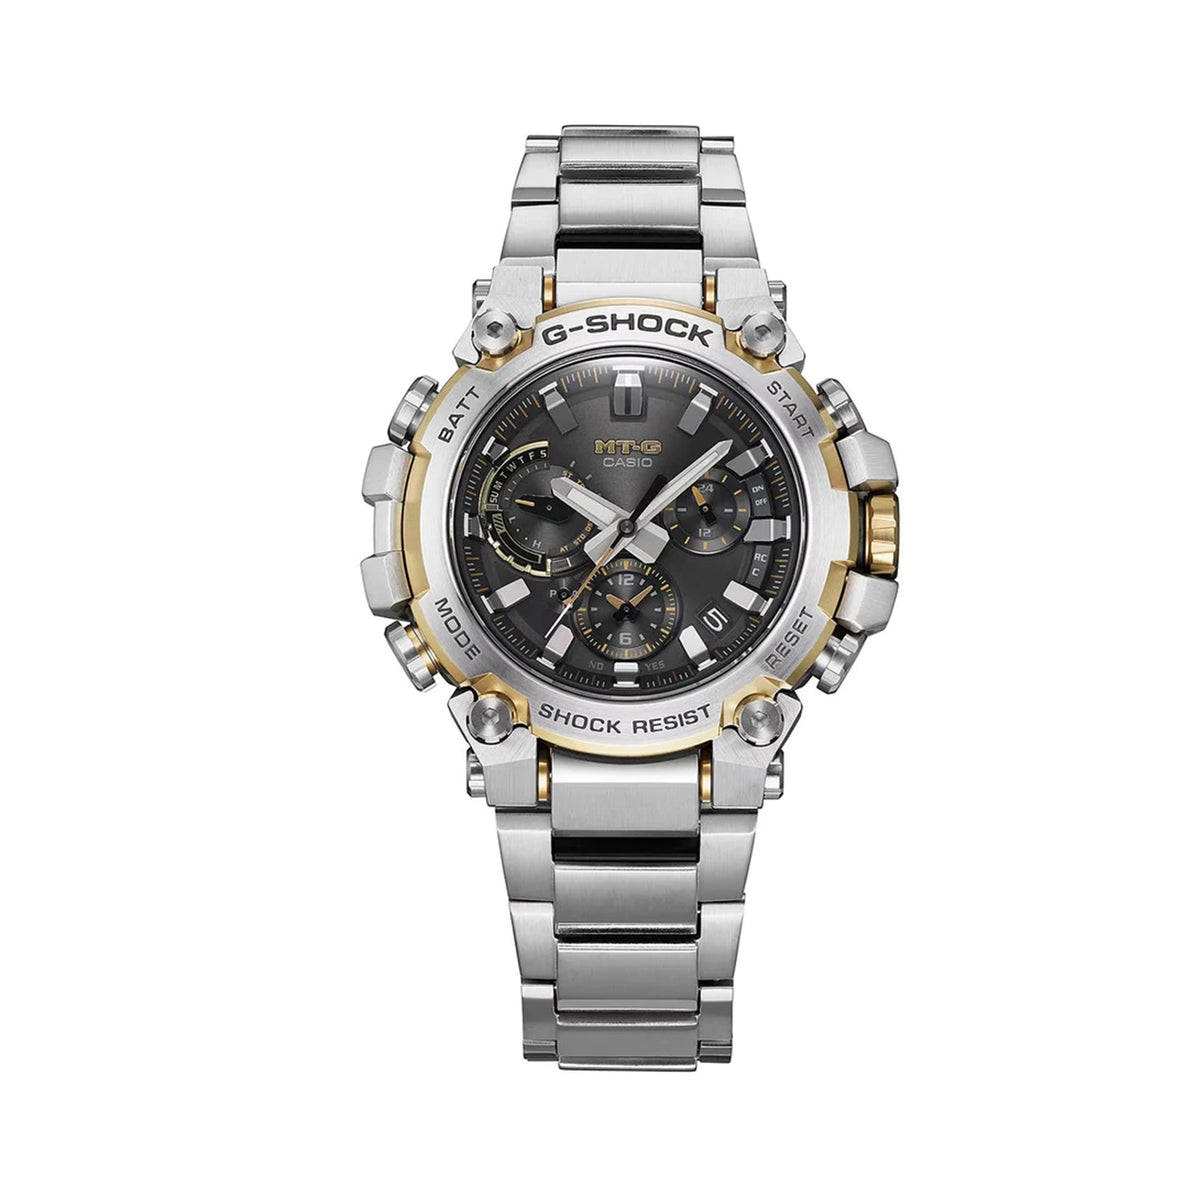 Casio G-SHOCK Stainless Steel Watch MTGB3000D-1A9